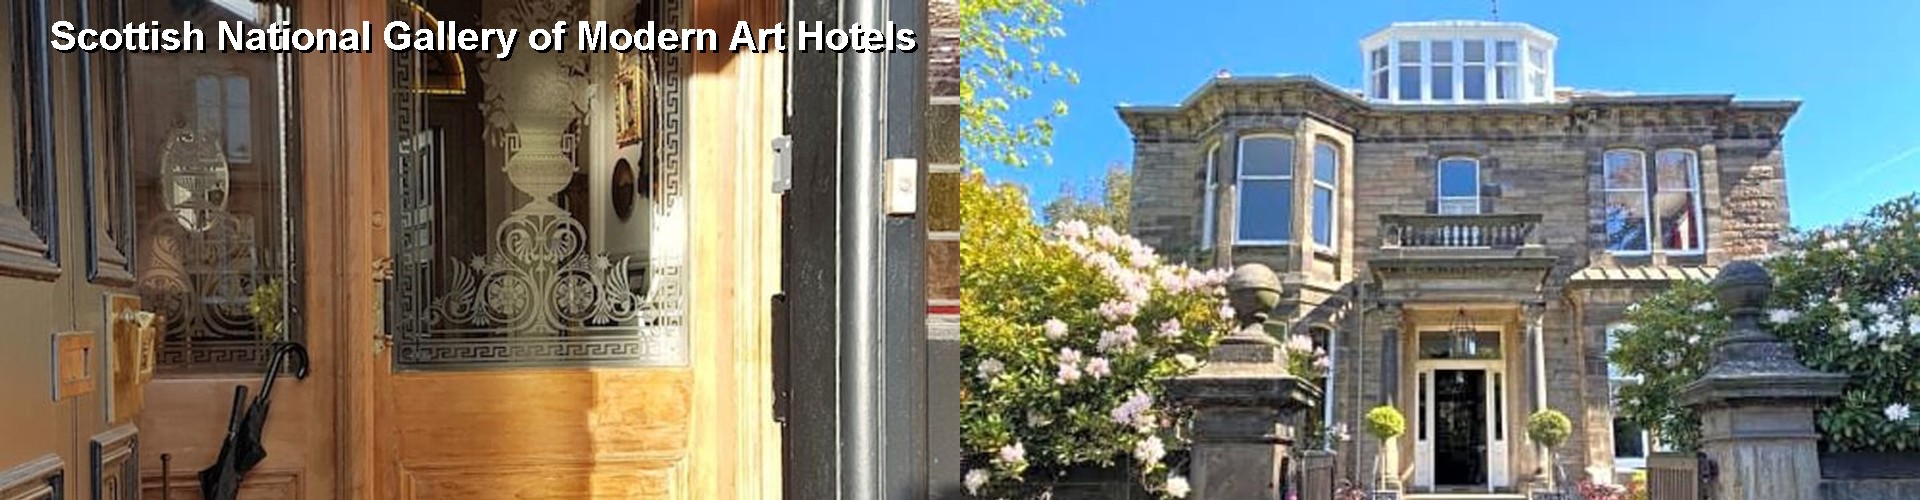 5 Best Hotels near Scottish National Gallery of Modern Art